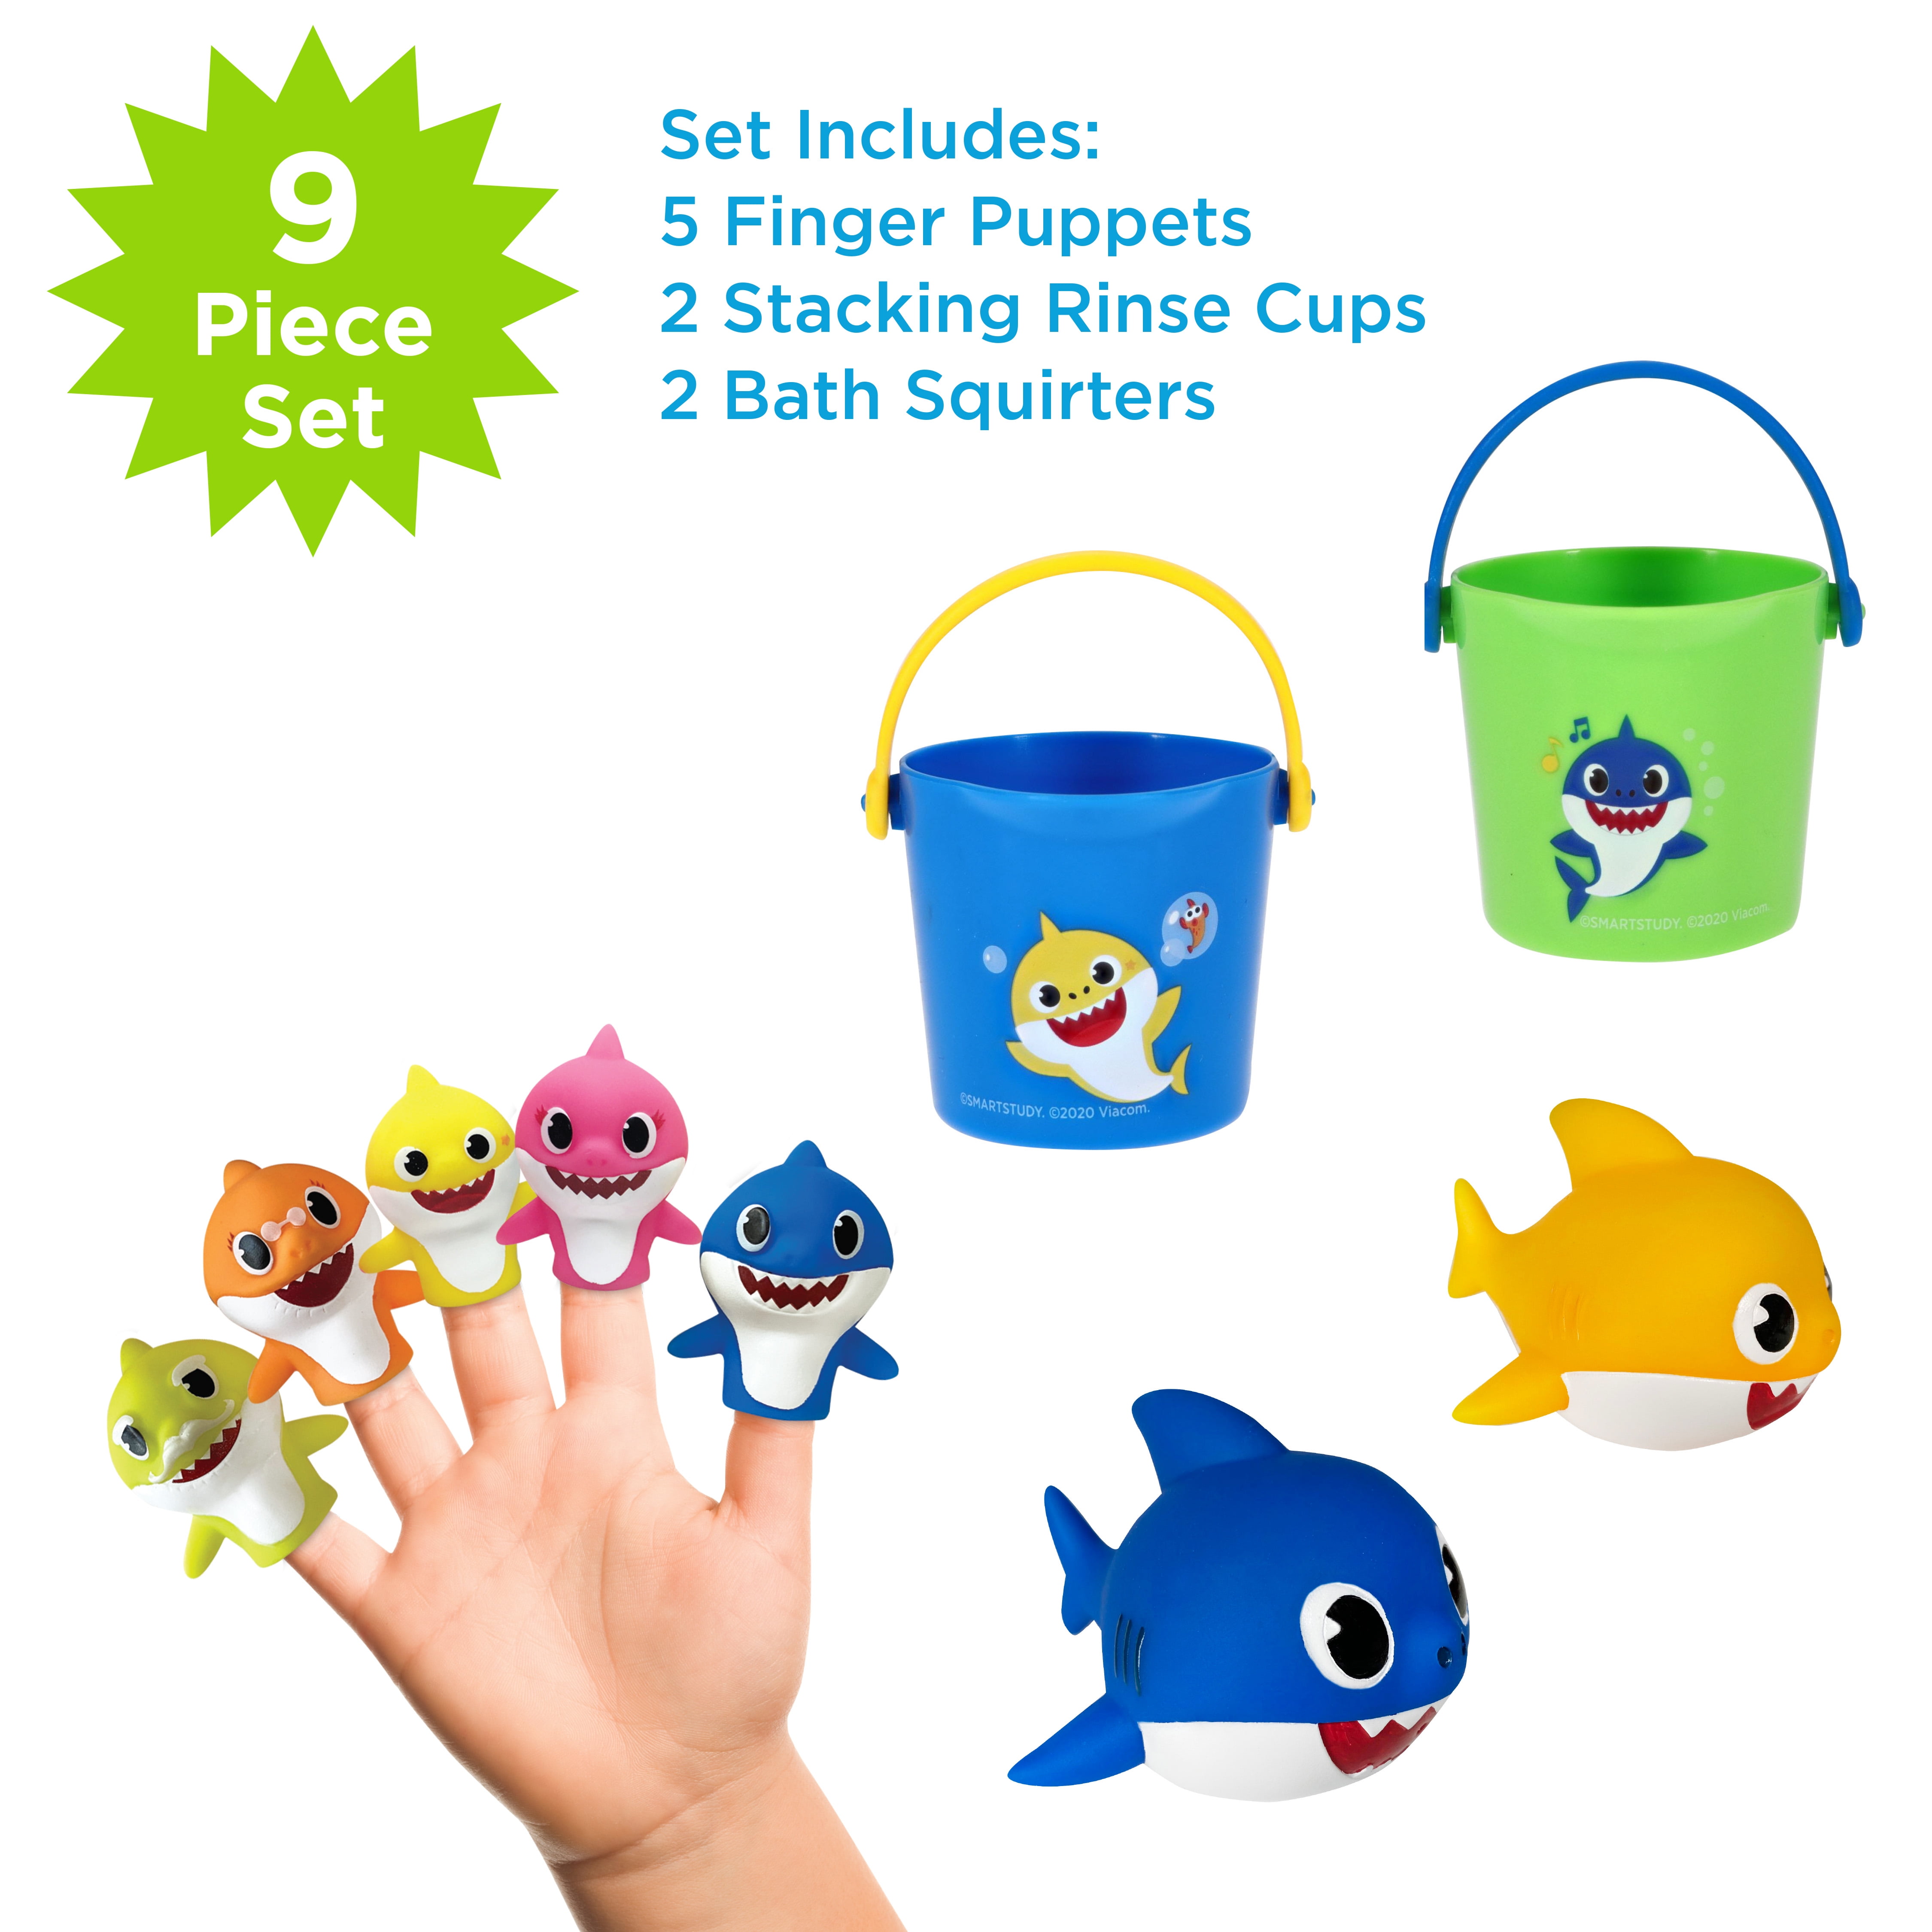 Baby Shark Bath Painting Playset, Dissolvable Finger Painting Bath Paints +  Reusable Poster, Bath Art Kit for Toddlers & Kids Ages 3, 4, 5, 6 - Toys 4 U